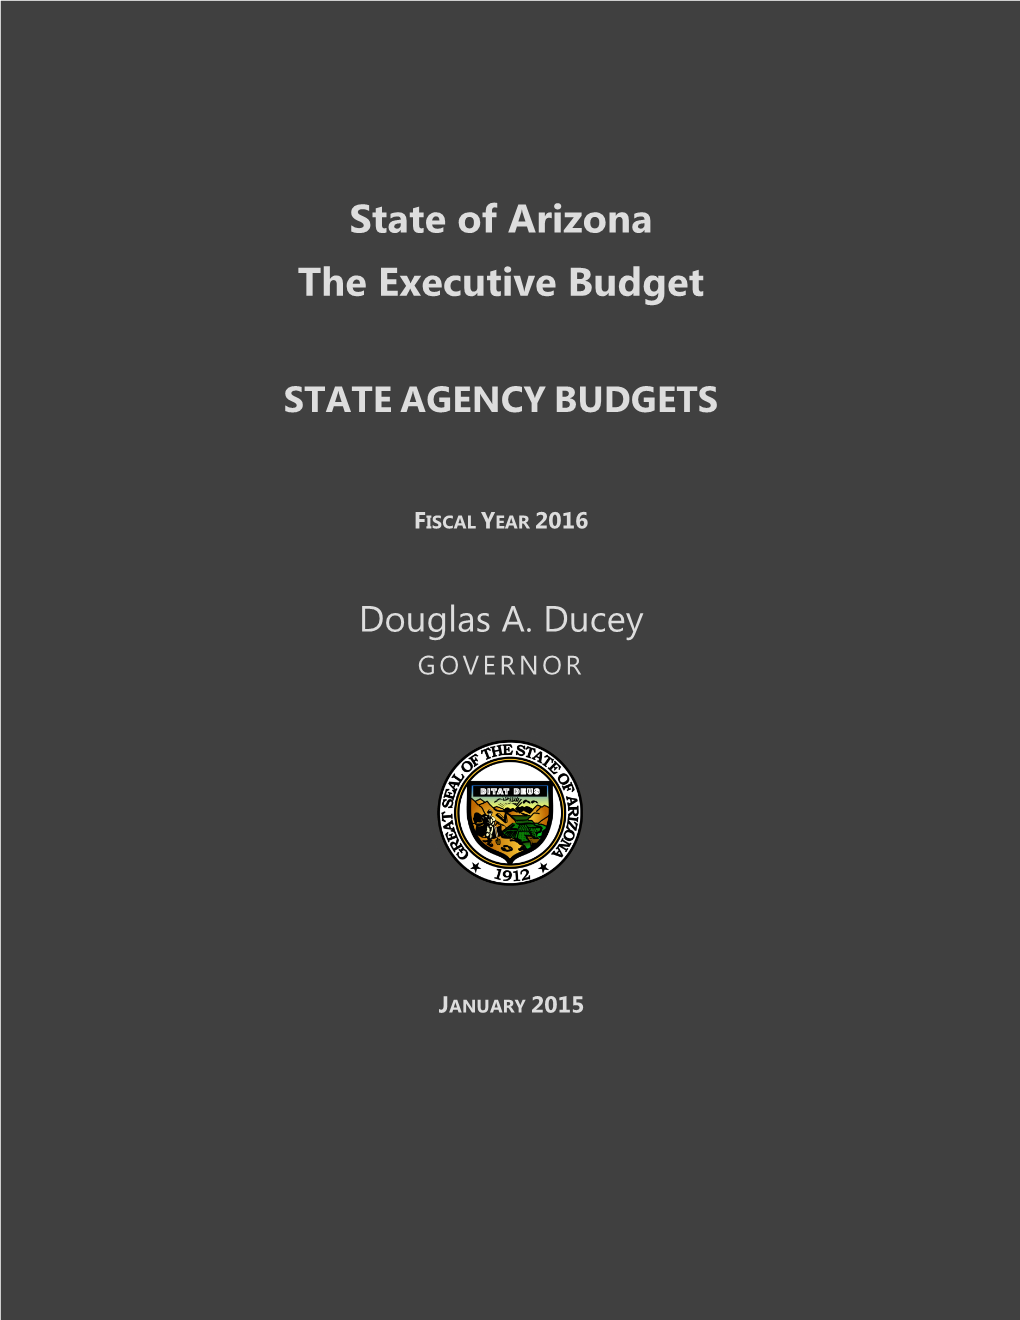 State of Arizona the Executive Budget